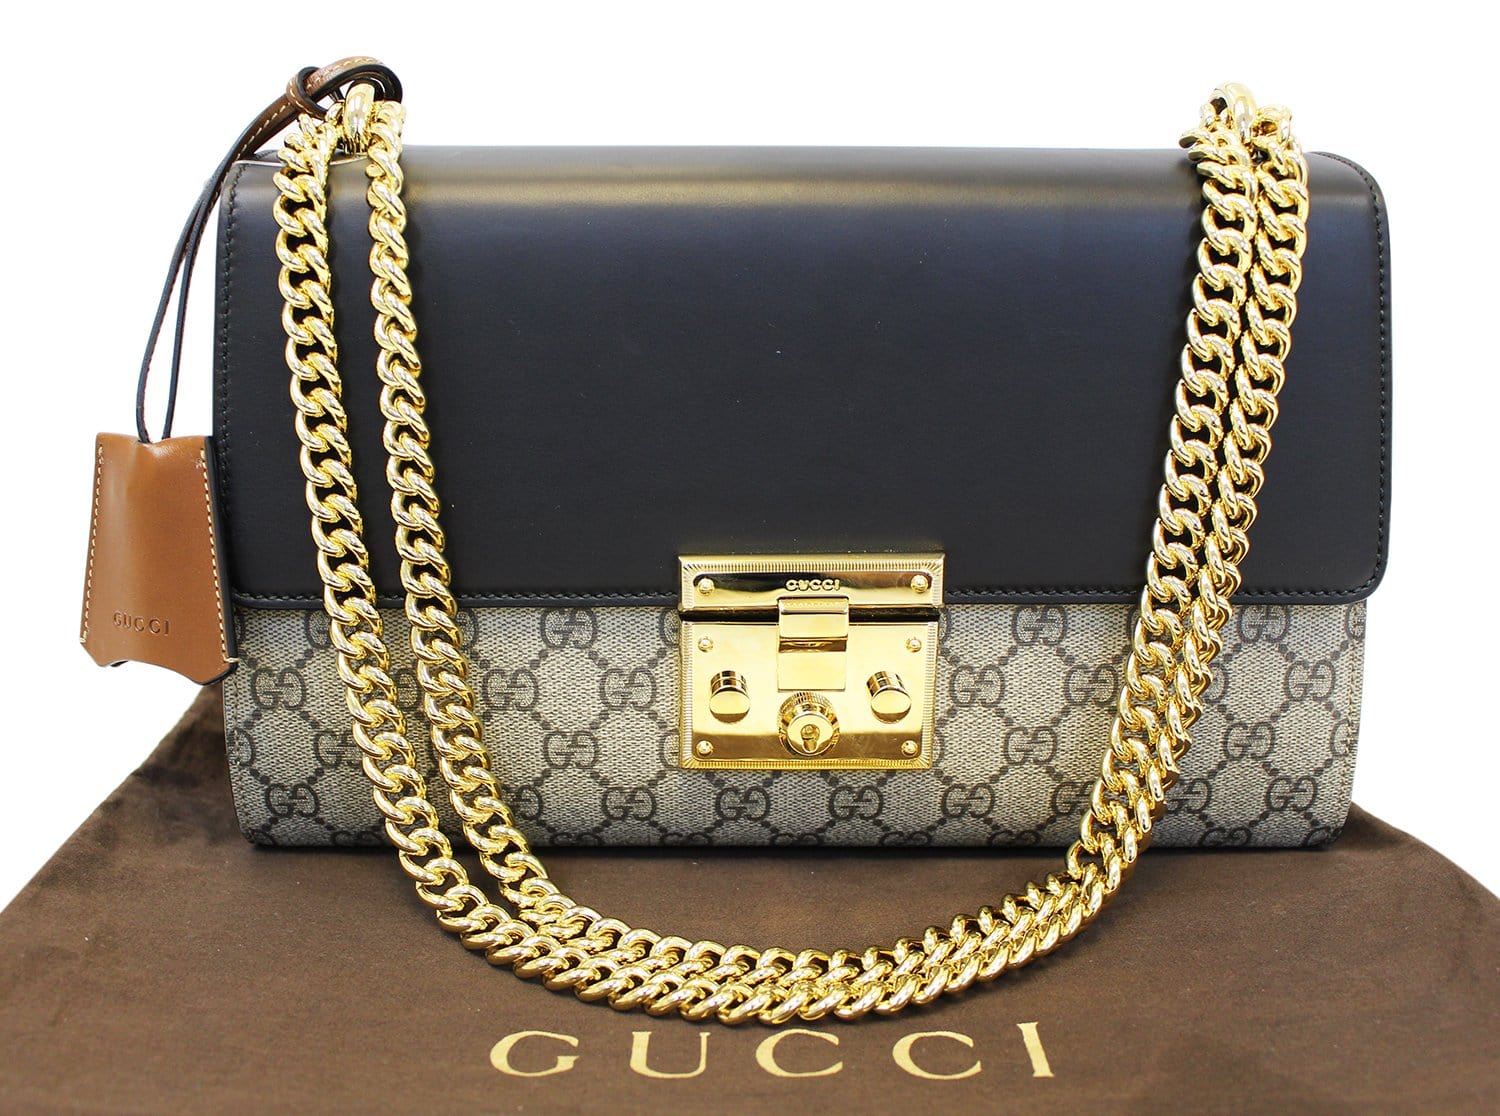 Gucci GG Supreme Padlock Medium Bag